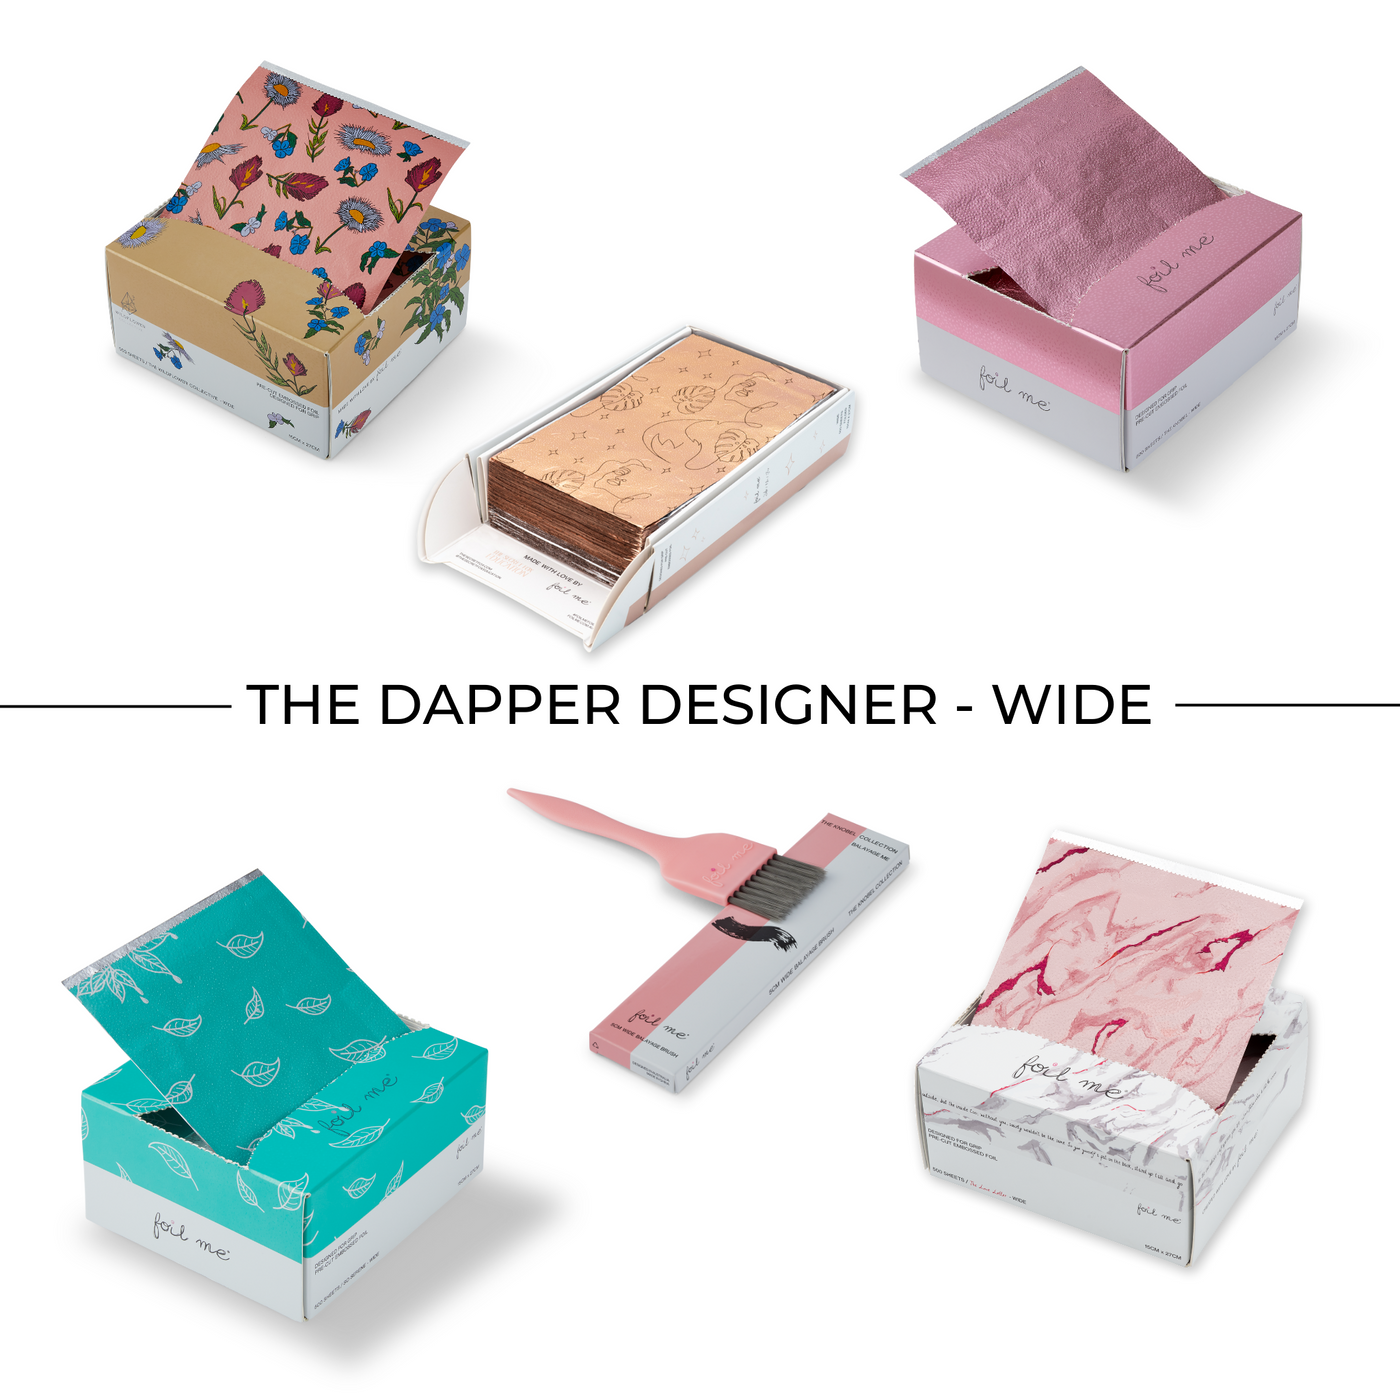 The Dapper Designer - Wide